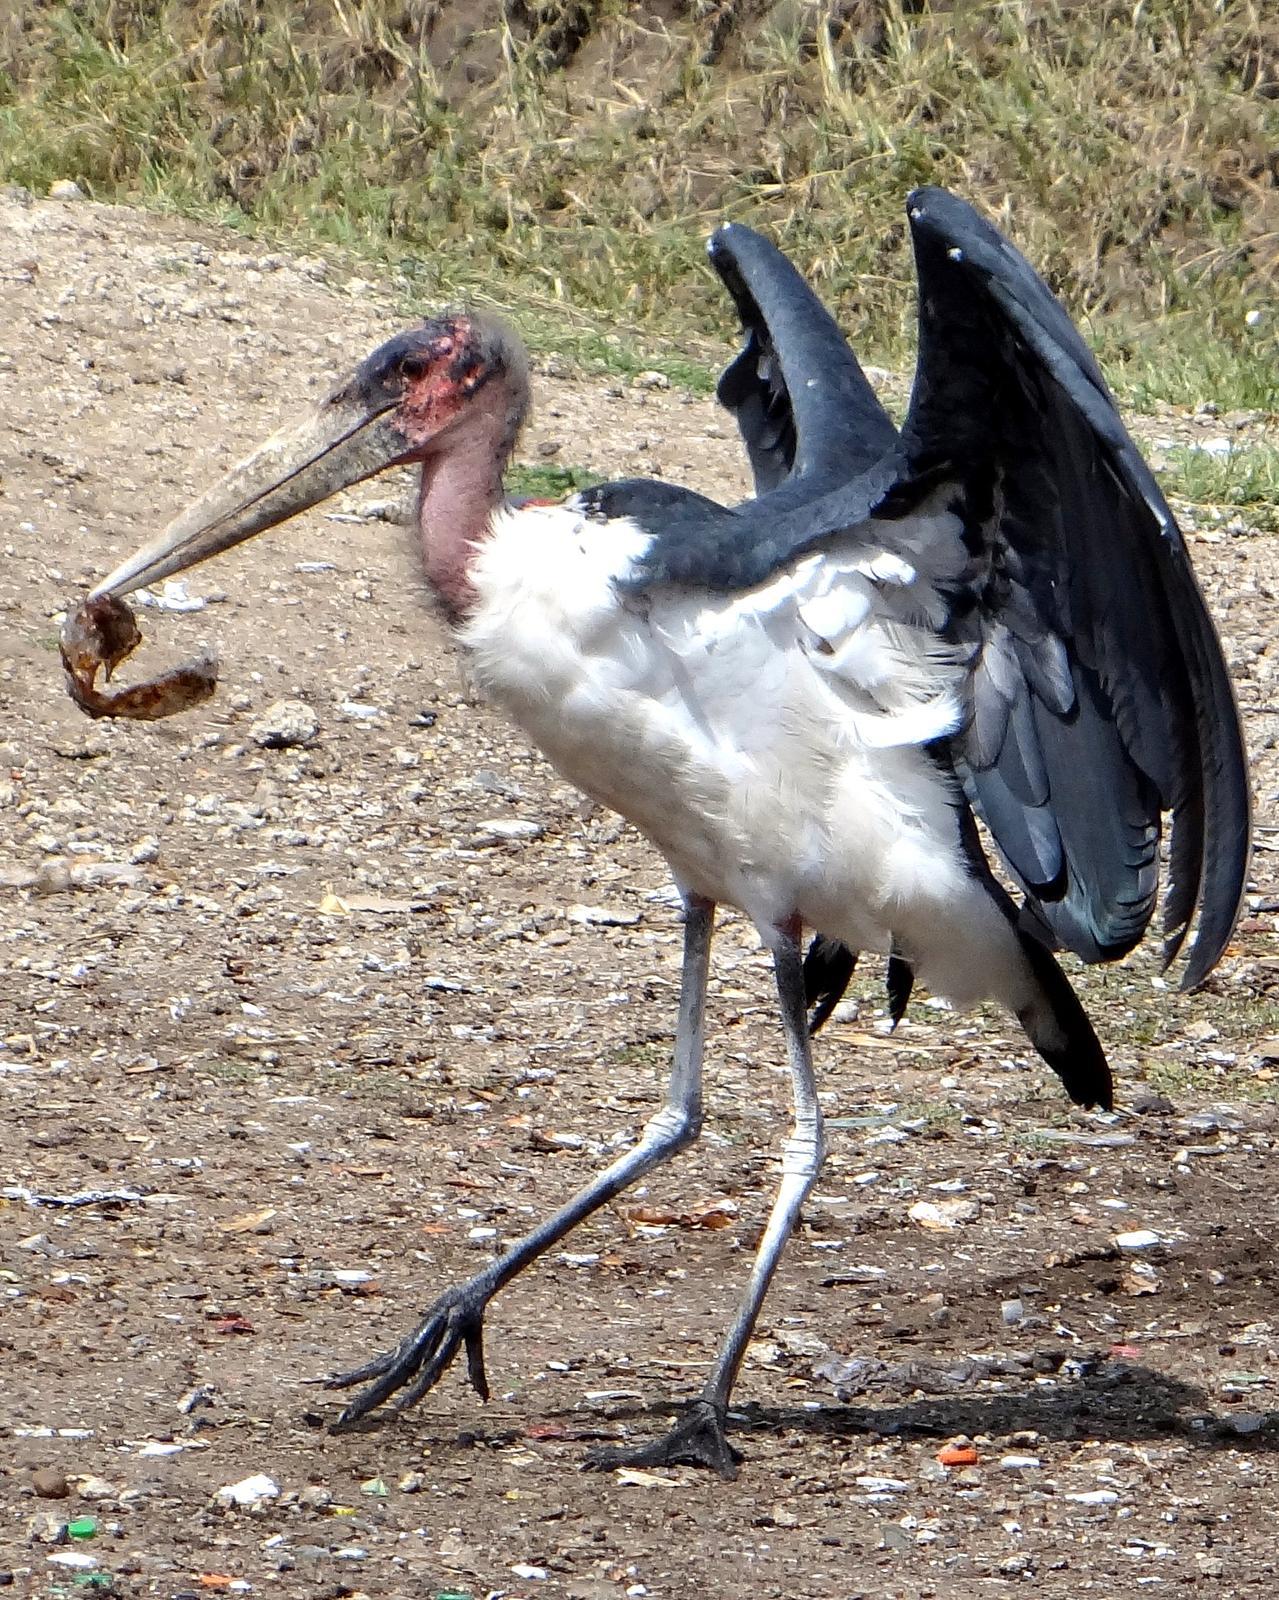 Marabou Stork Photo by Todd A. Watkins